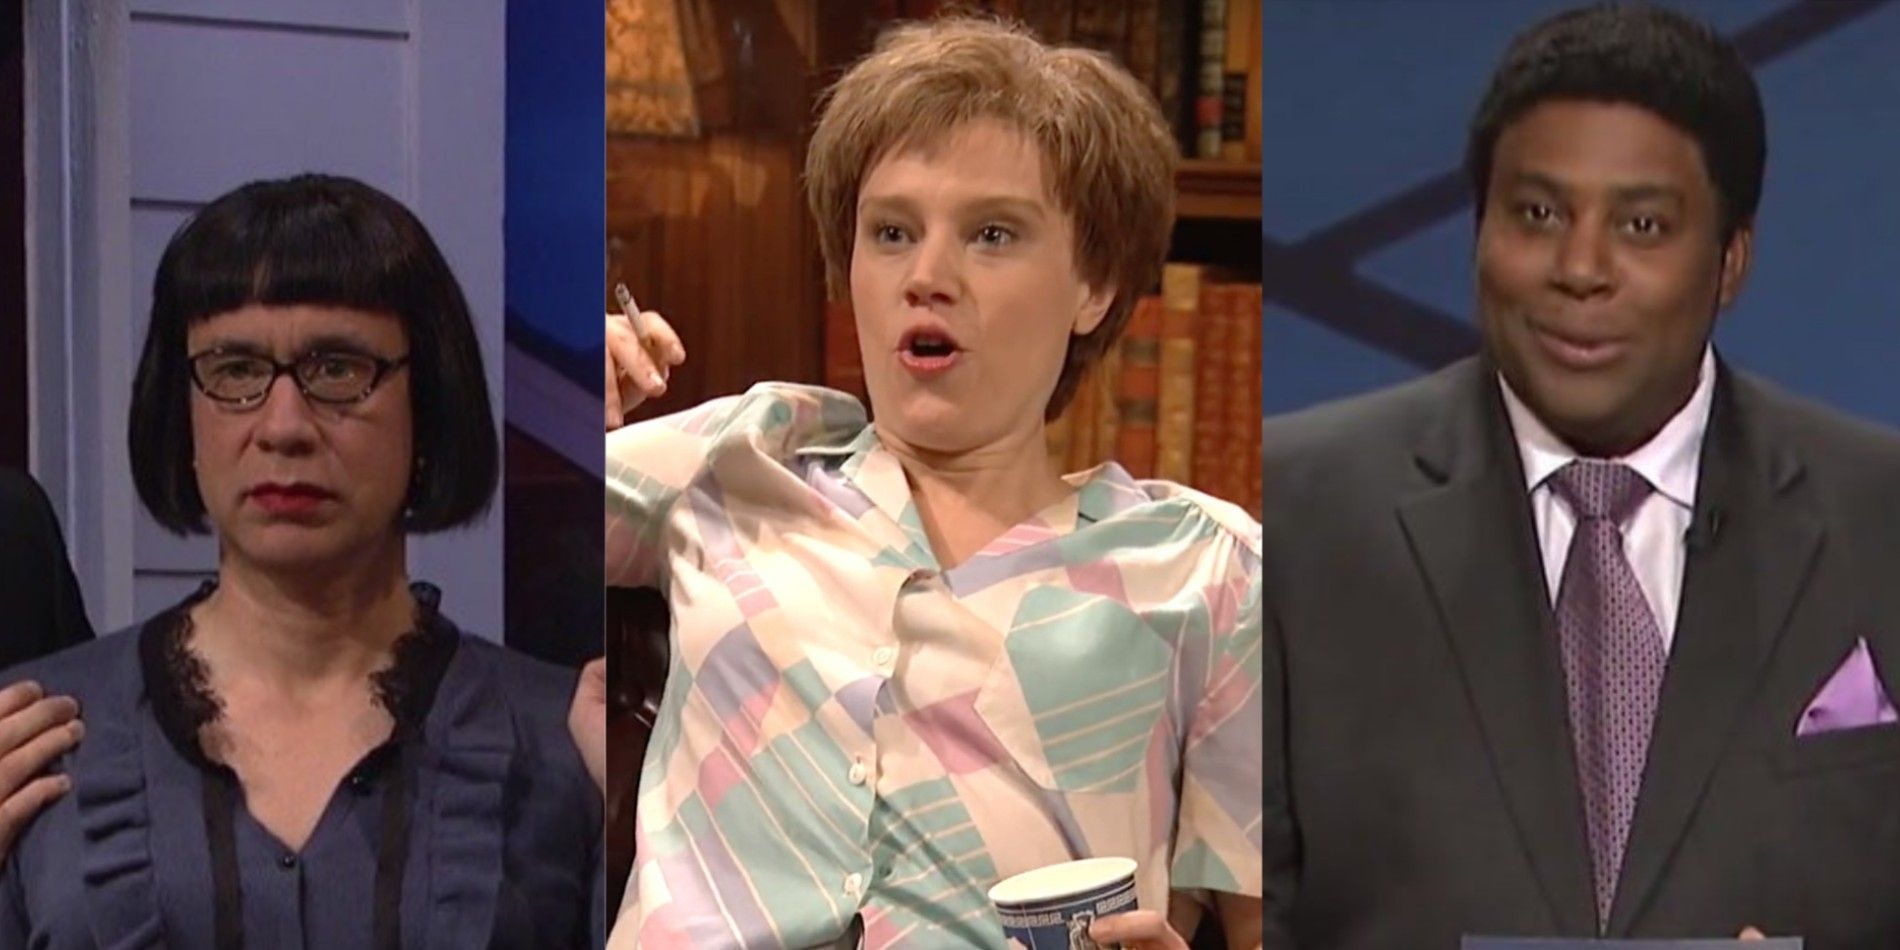 Split image: Fred Armisen, Kate McKinnon, Kenan Thompson playing characters on Saturday Night Live.